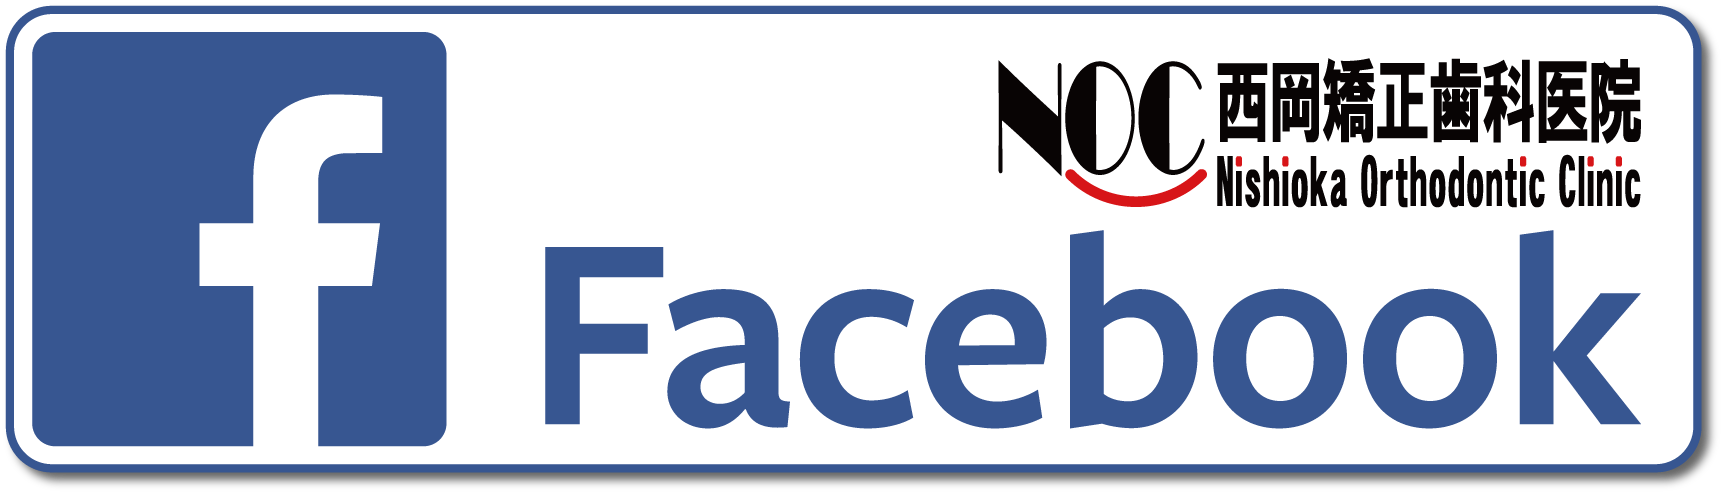 NOCfacebook